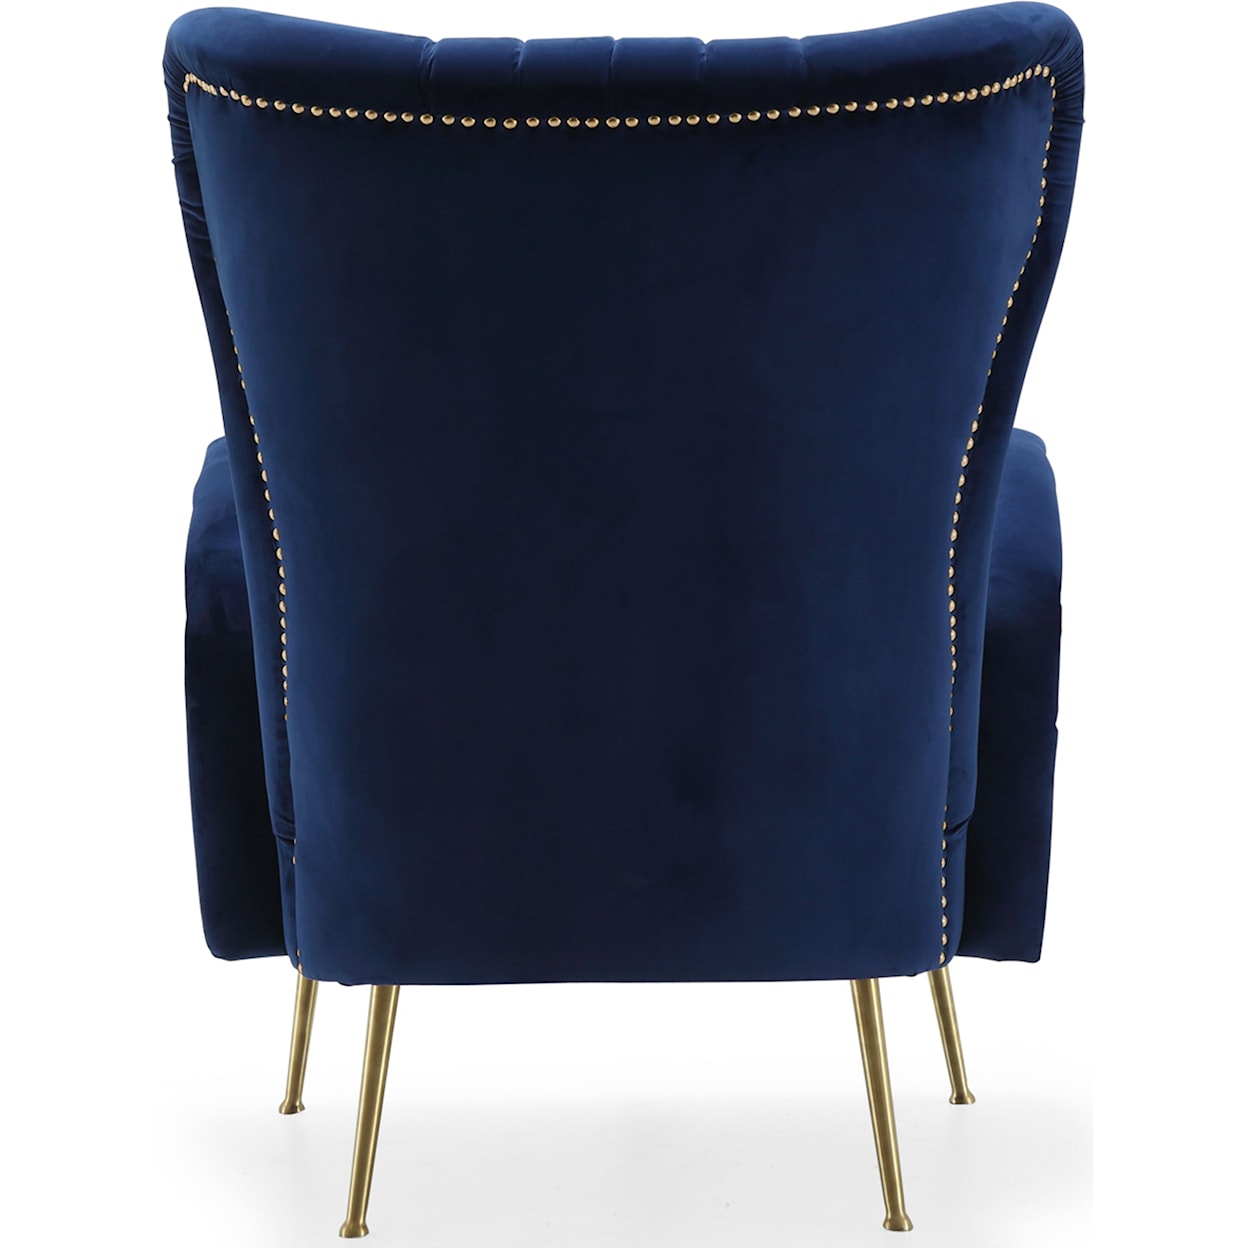 Meridian Furniture Opera Accent Chair